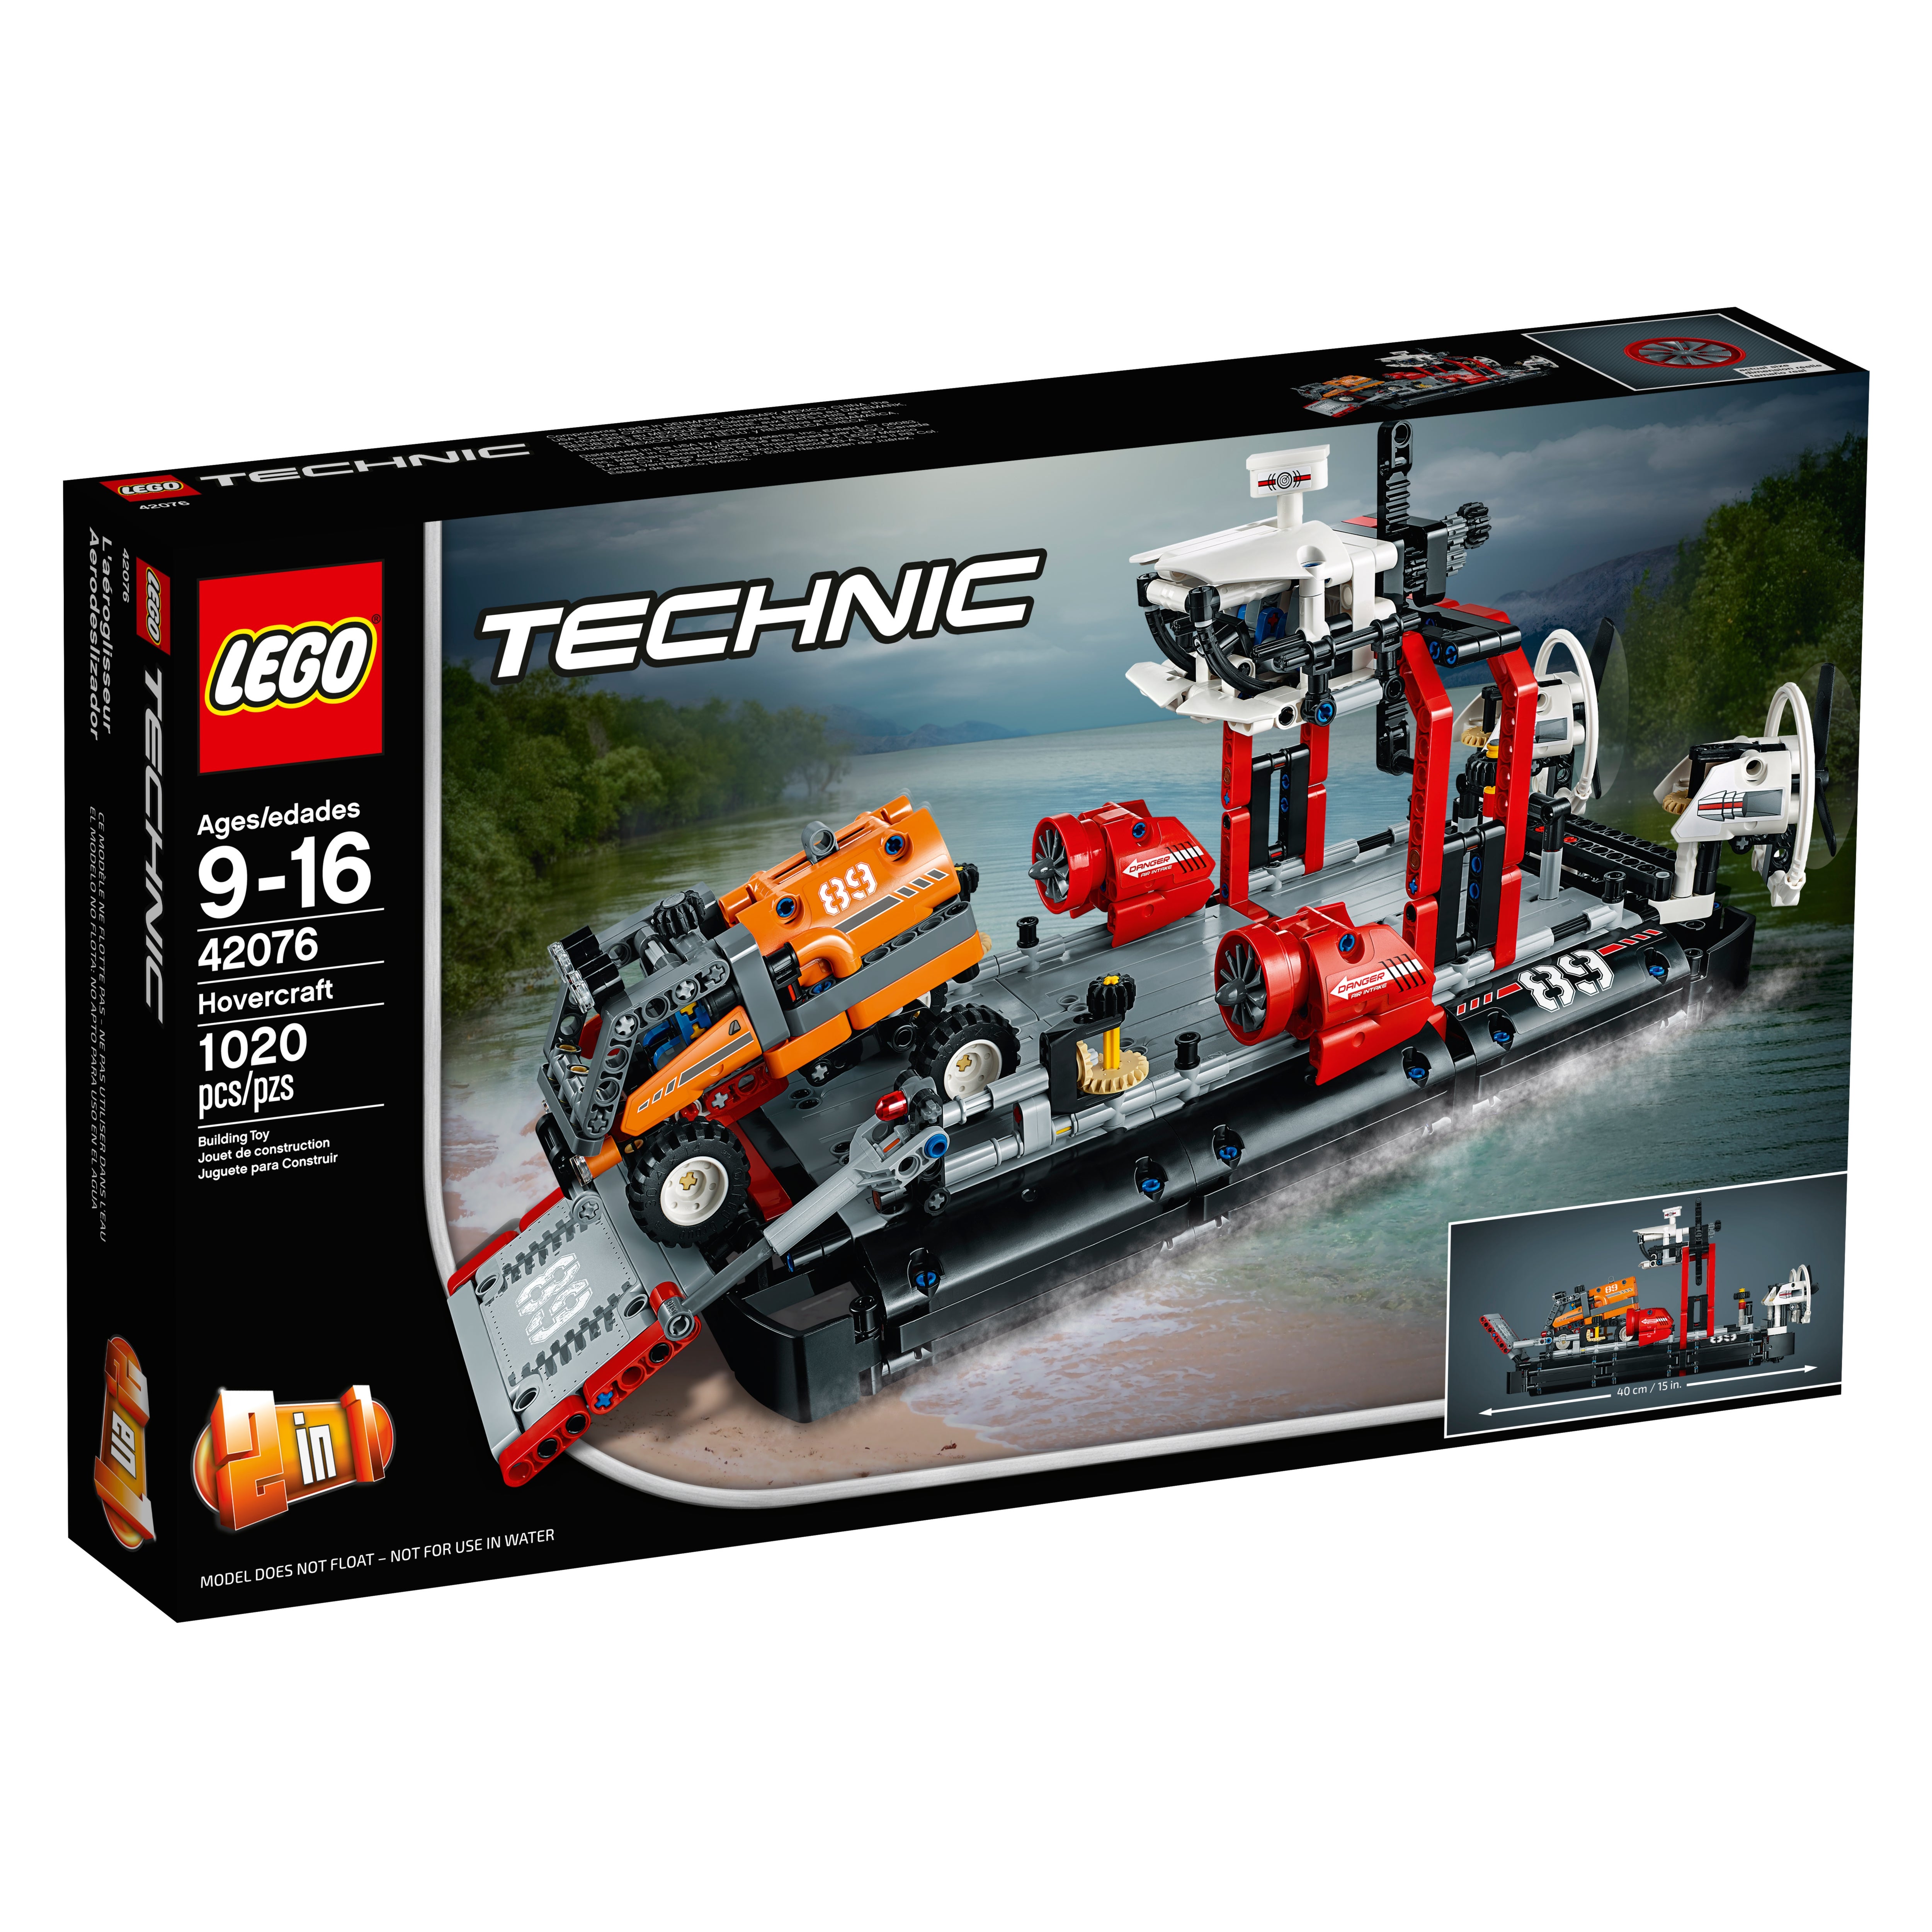 ~~LEGO TECHNIC 42076 HOVERCRAFT INSTRUCTION MANUAL ONLY 